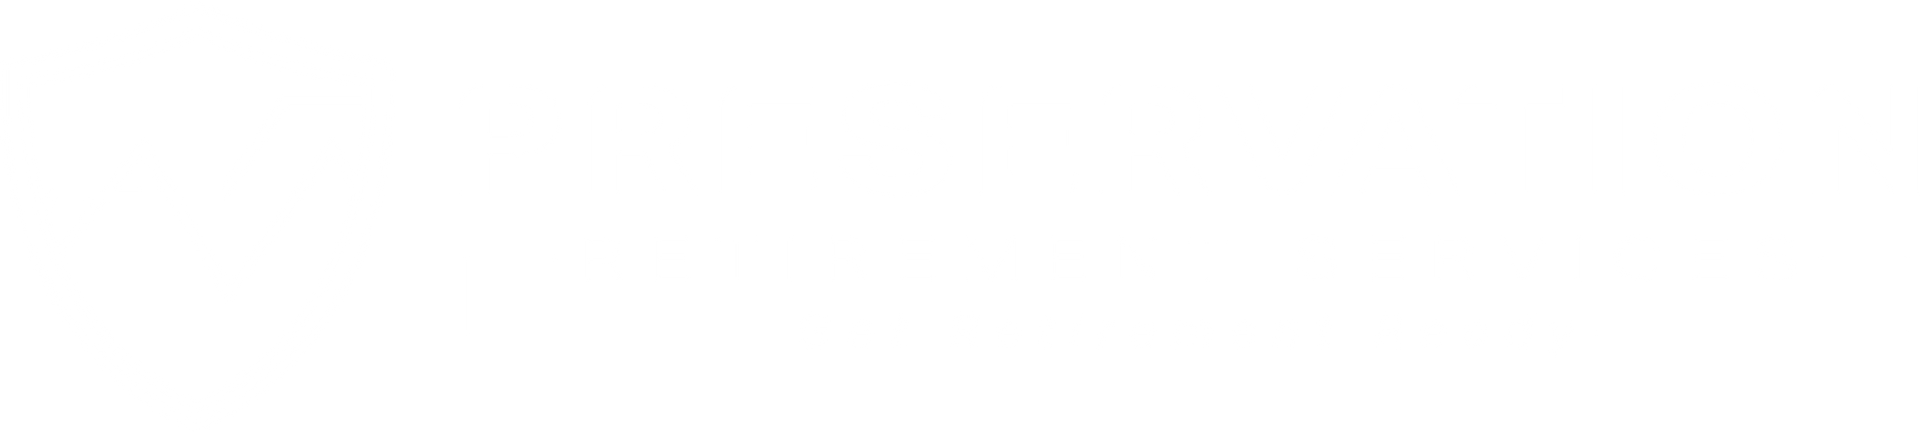 Preservation Retirement Services. Get Retirement Ready